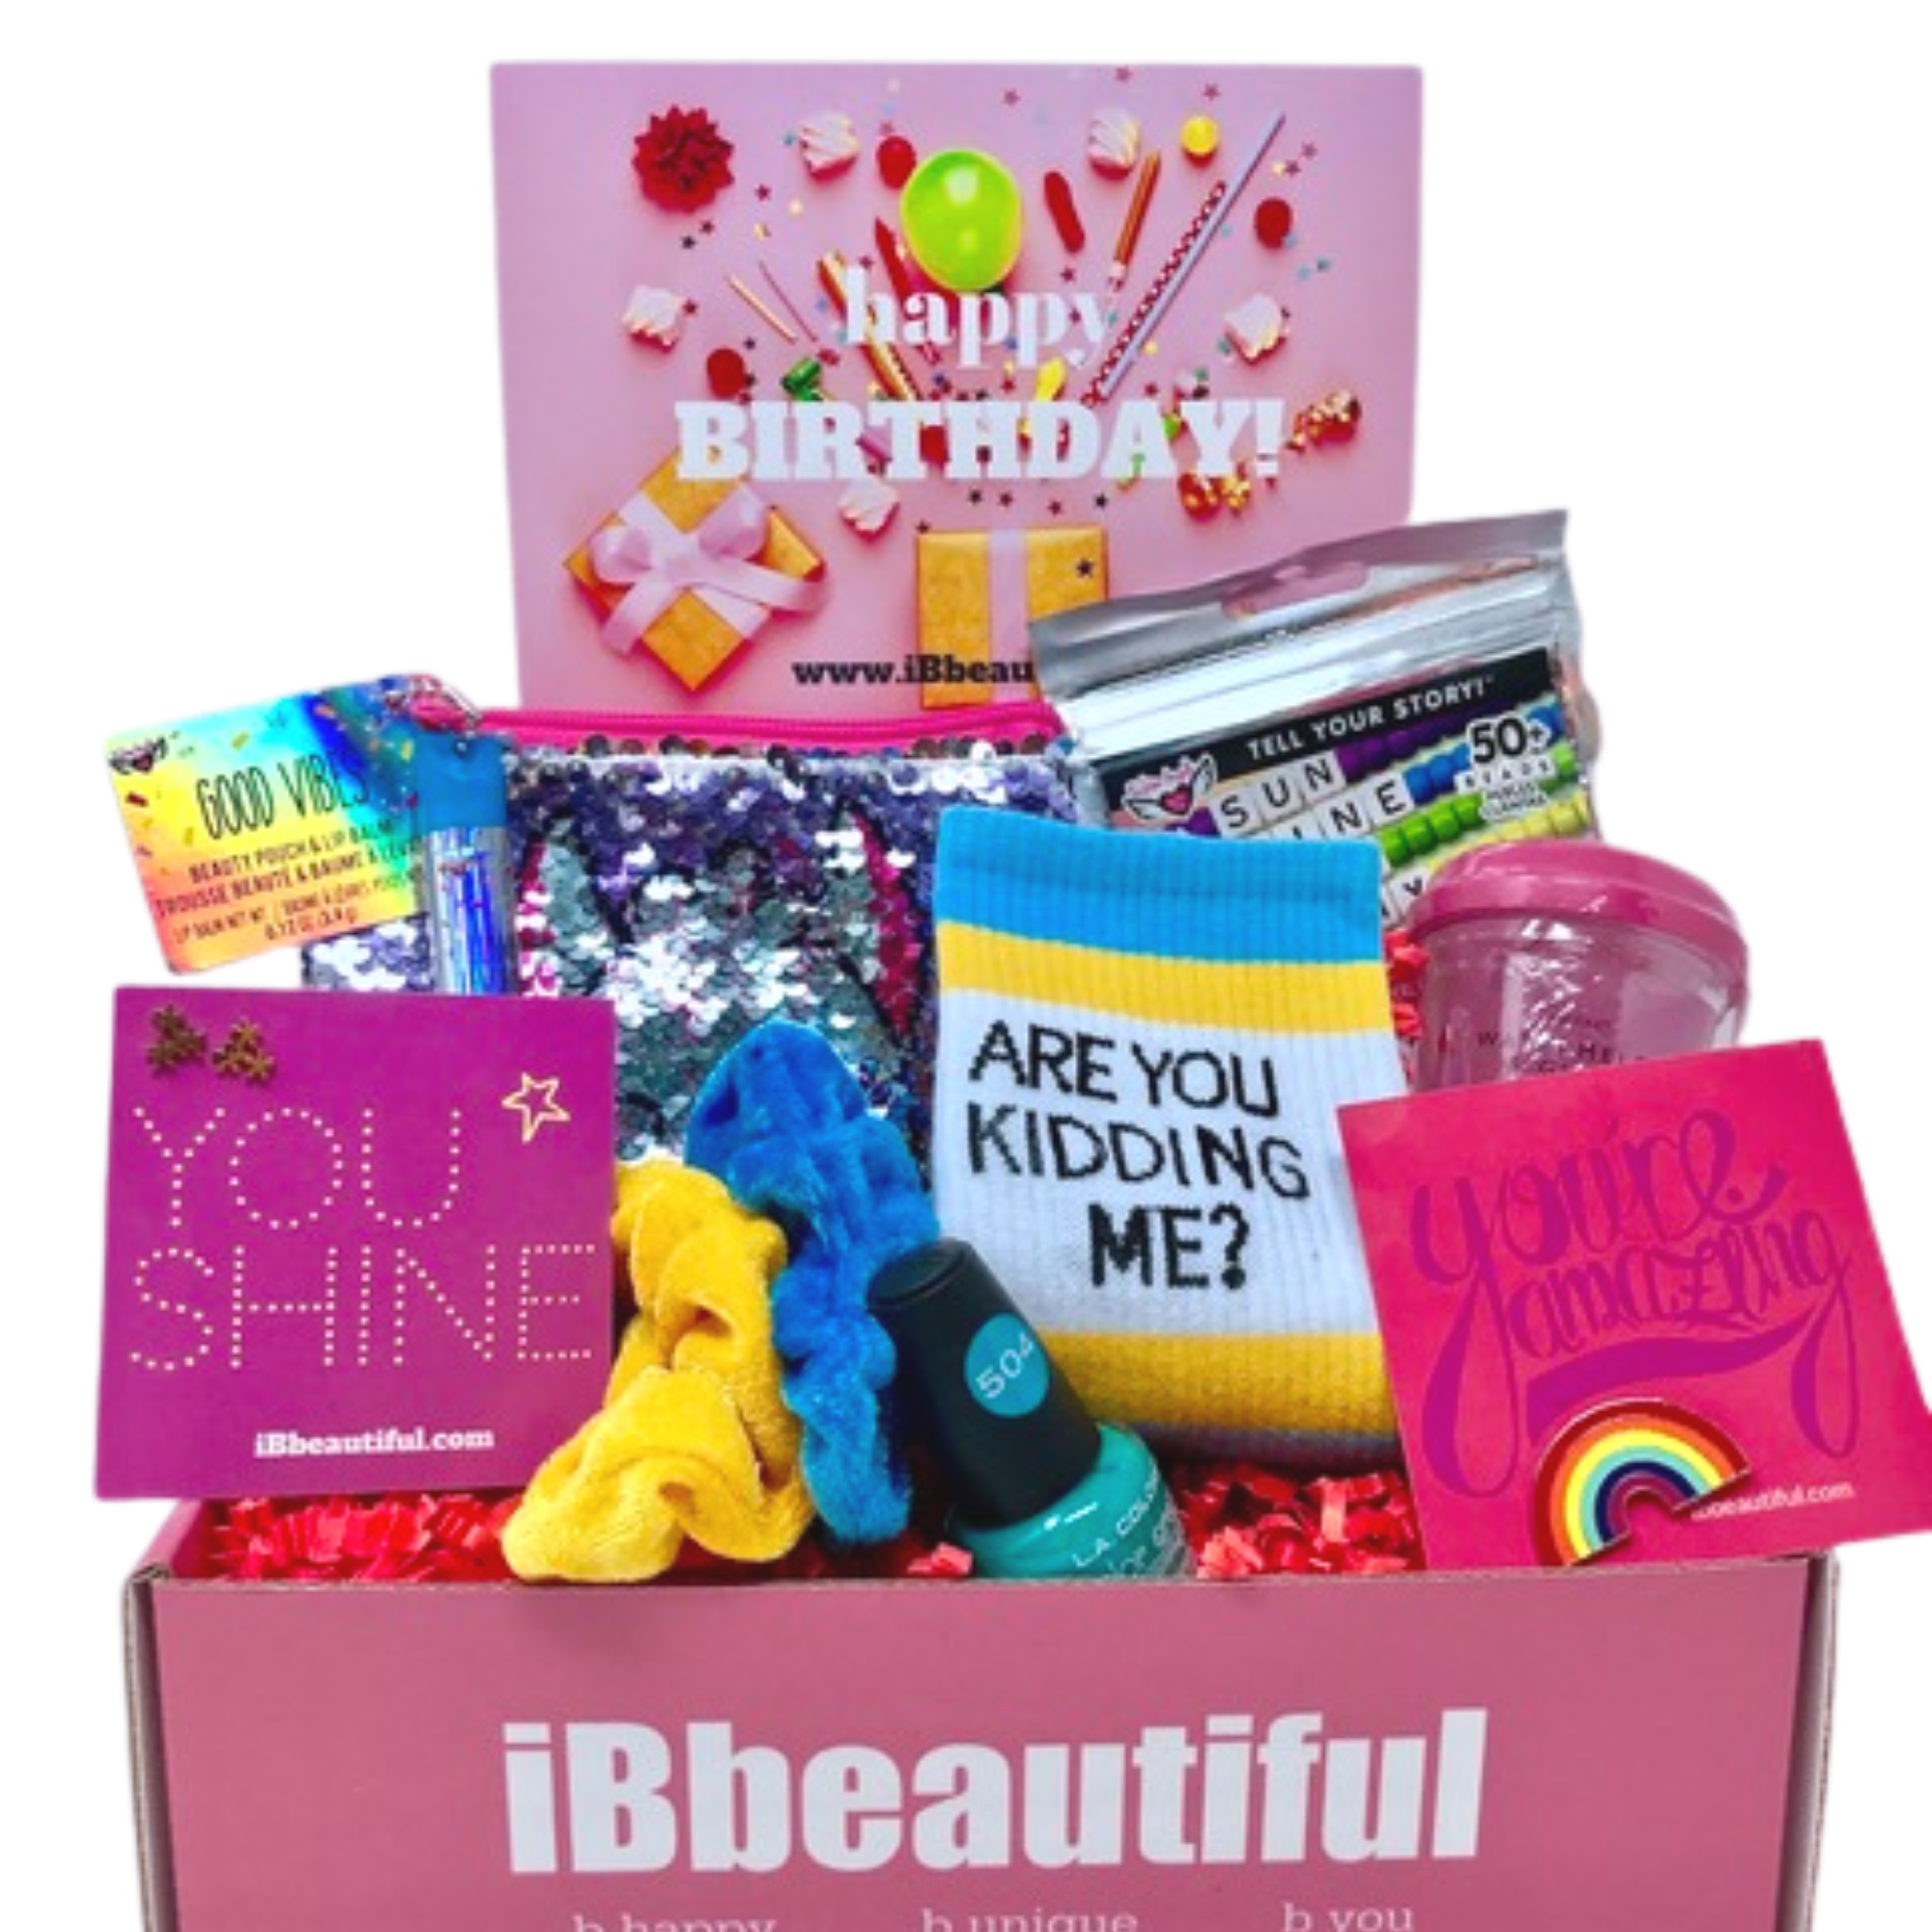 10 Year Old Girl Birthday Gifts, Birthday Gifts for 10 Year Old Girls, 10th Birthday Gifts for Girls, Birthday Presents for 10 Yr Girls, Gifts for